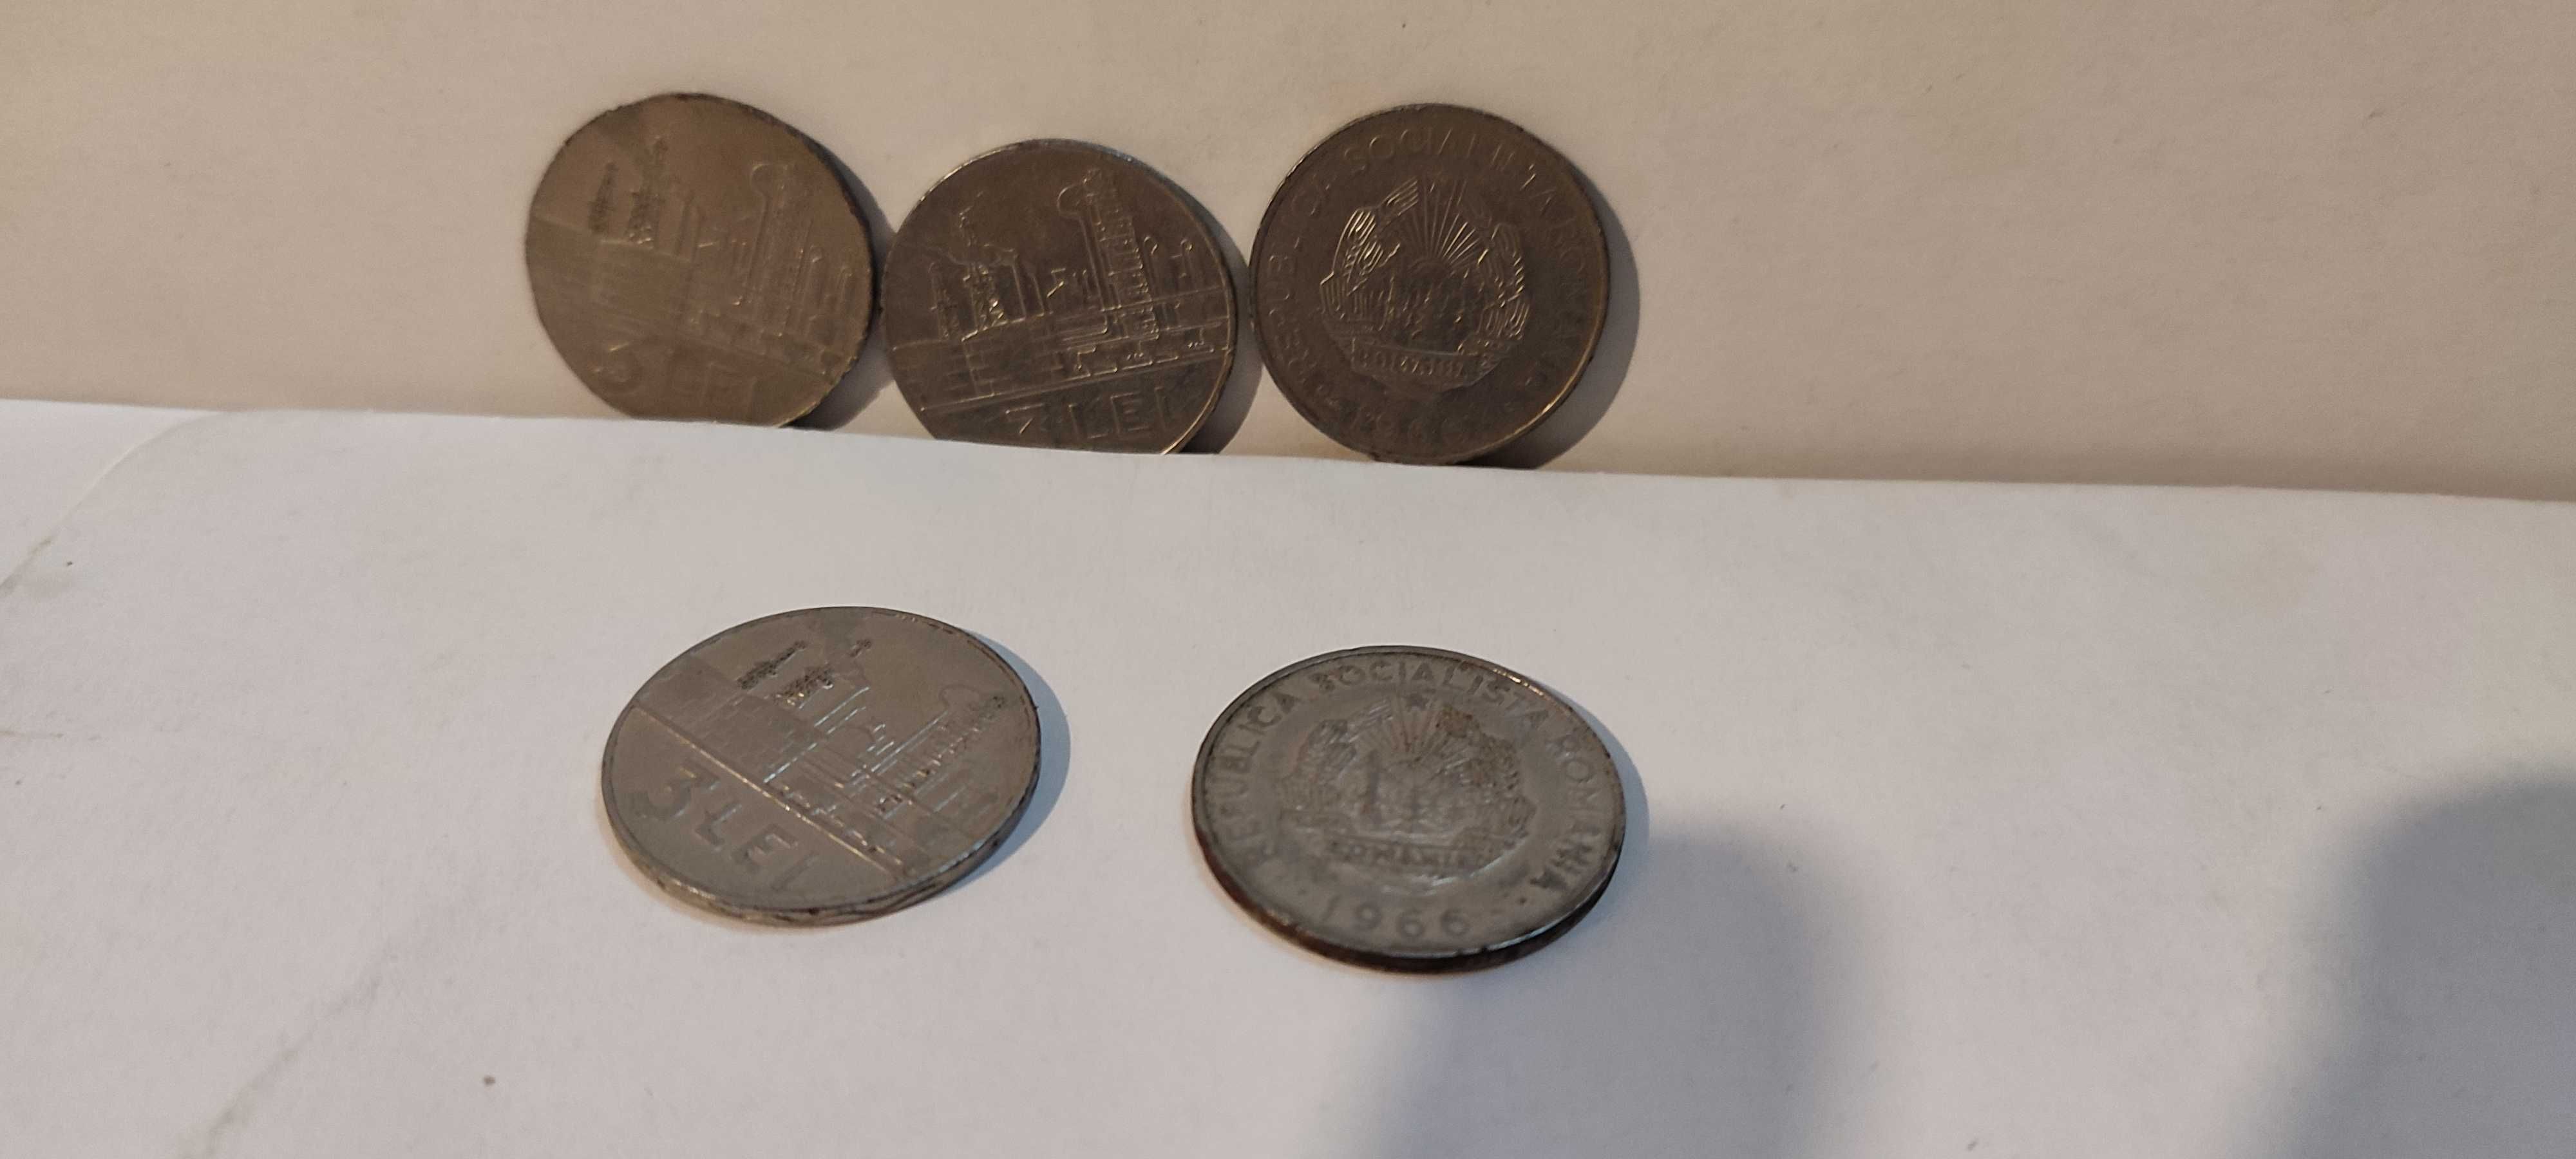 Monede romanesti, anii 60, stare buna